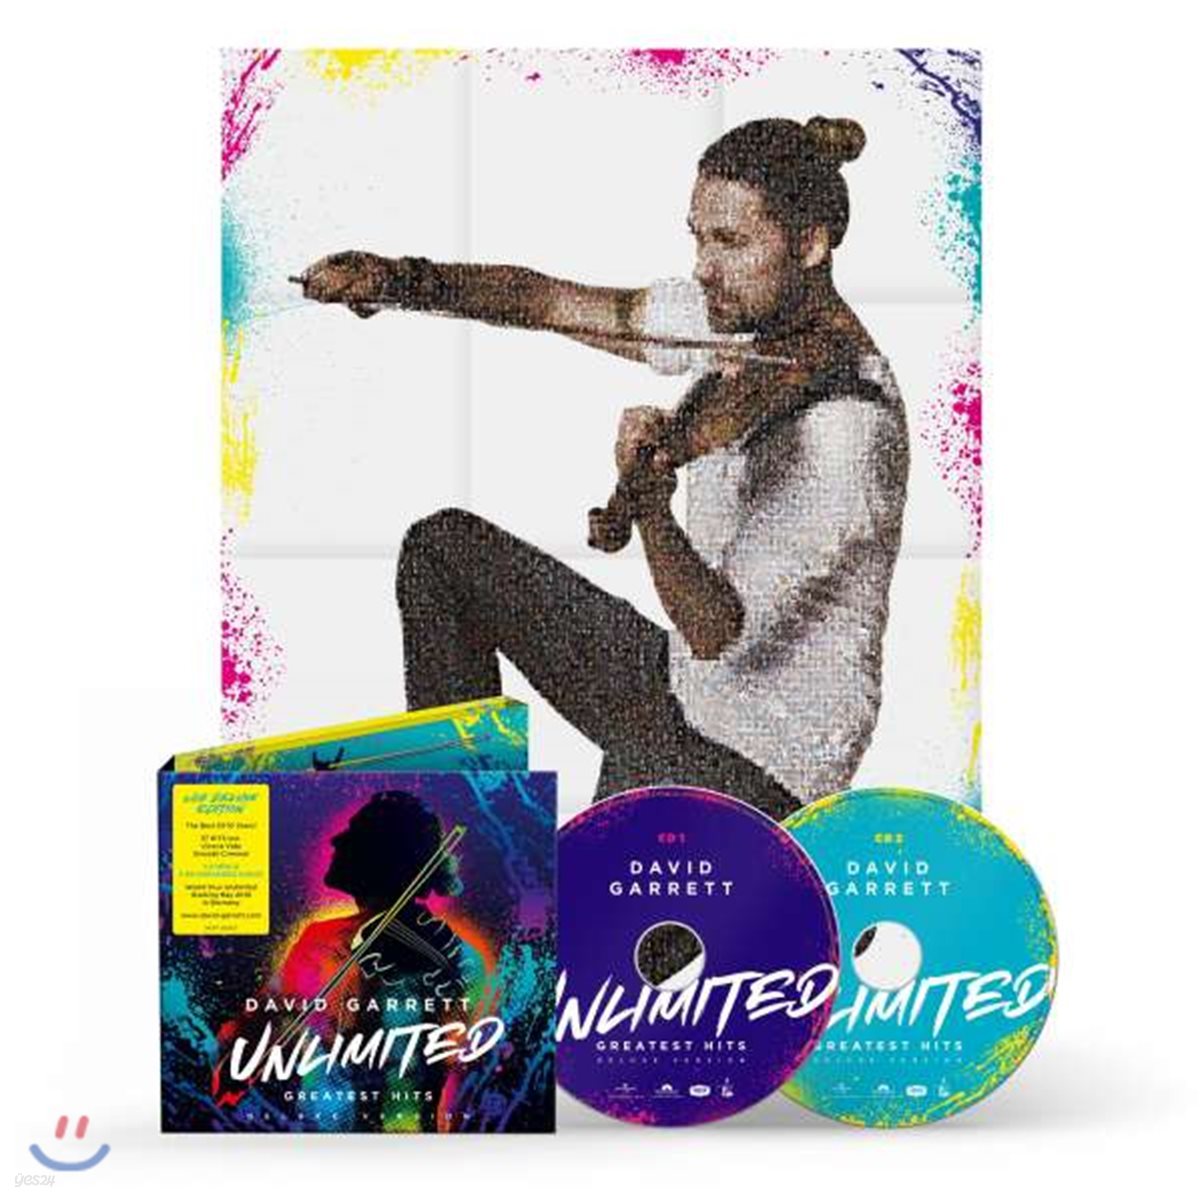 David Garrett - Unlimited: Greatest Hits 데이빗 가렛 베스트 앨범 [2CD 디럭스 에디션]